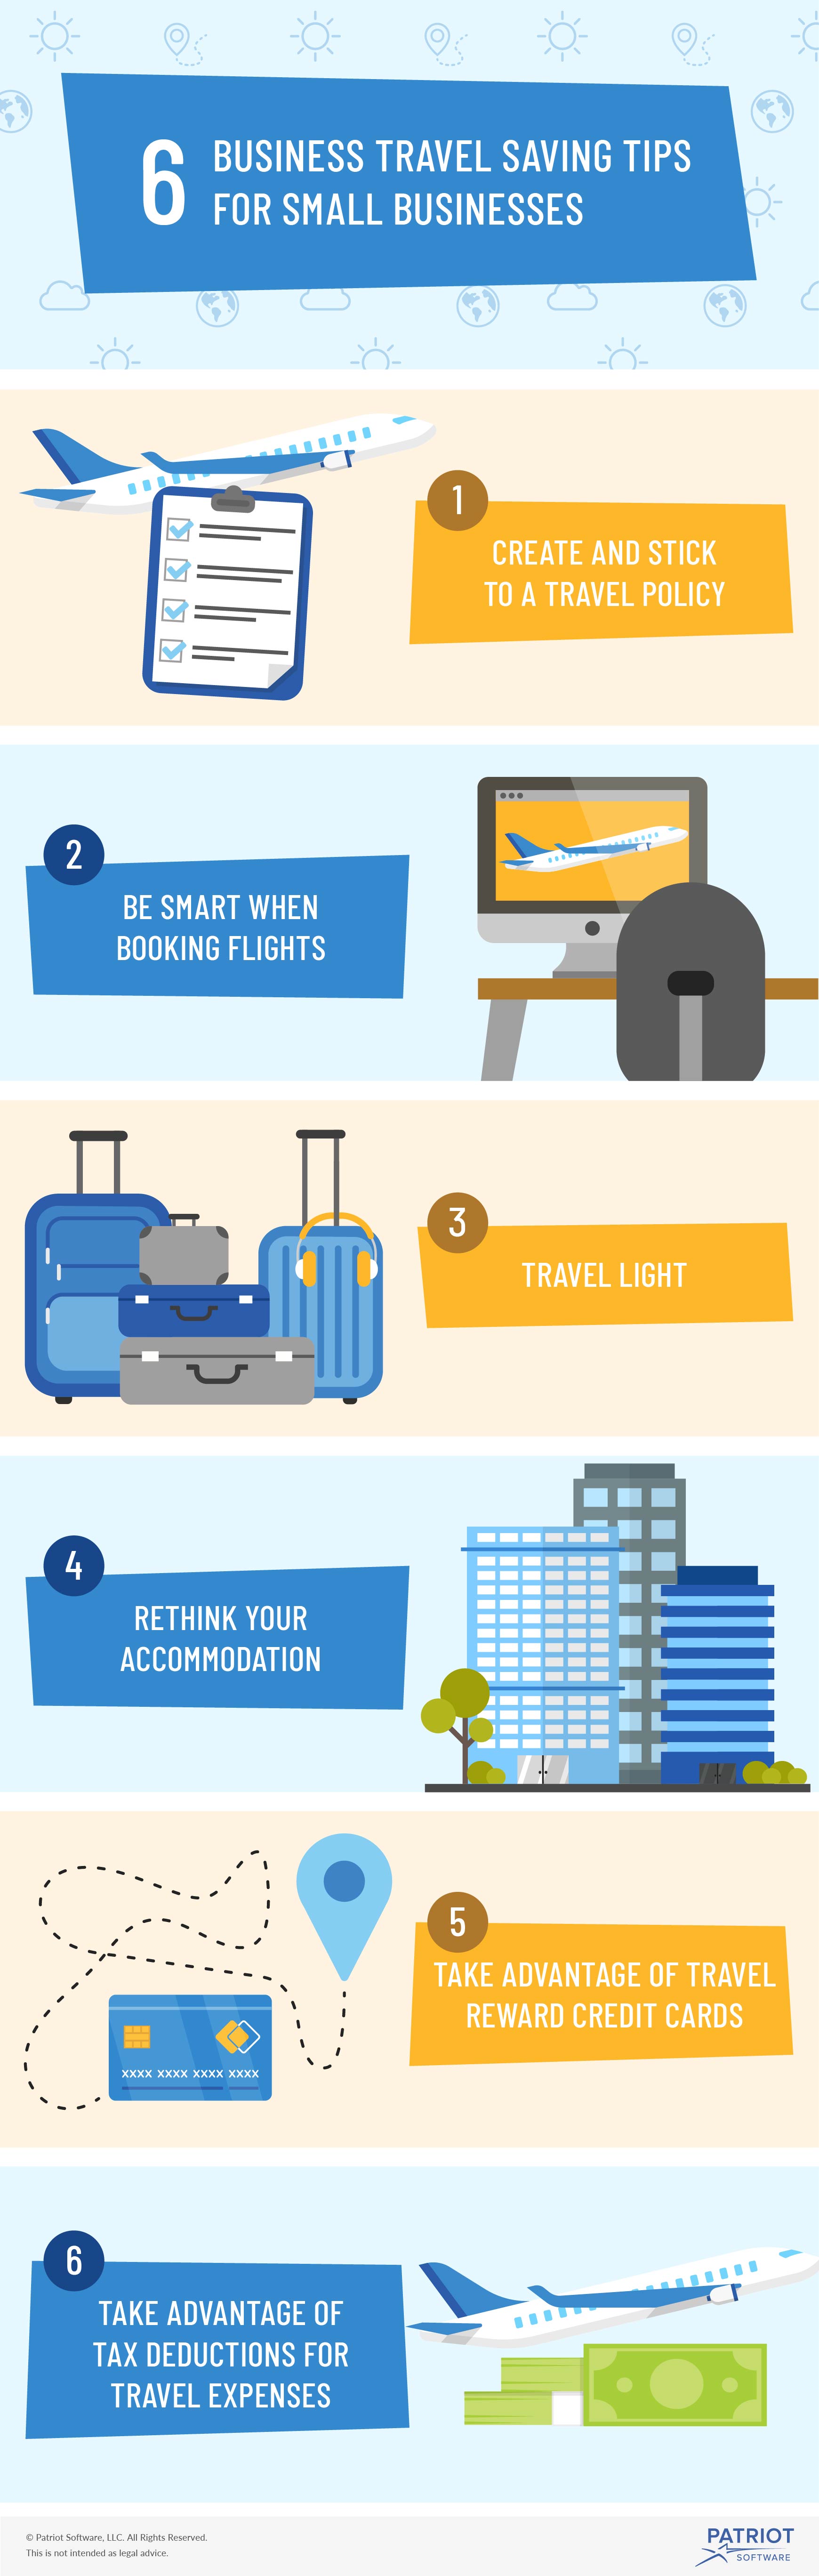 business travel saving tips 